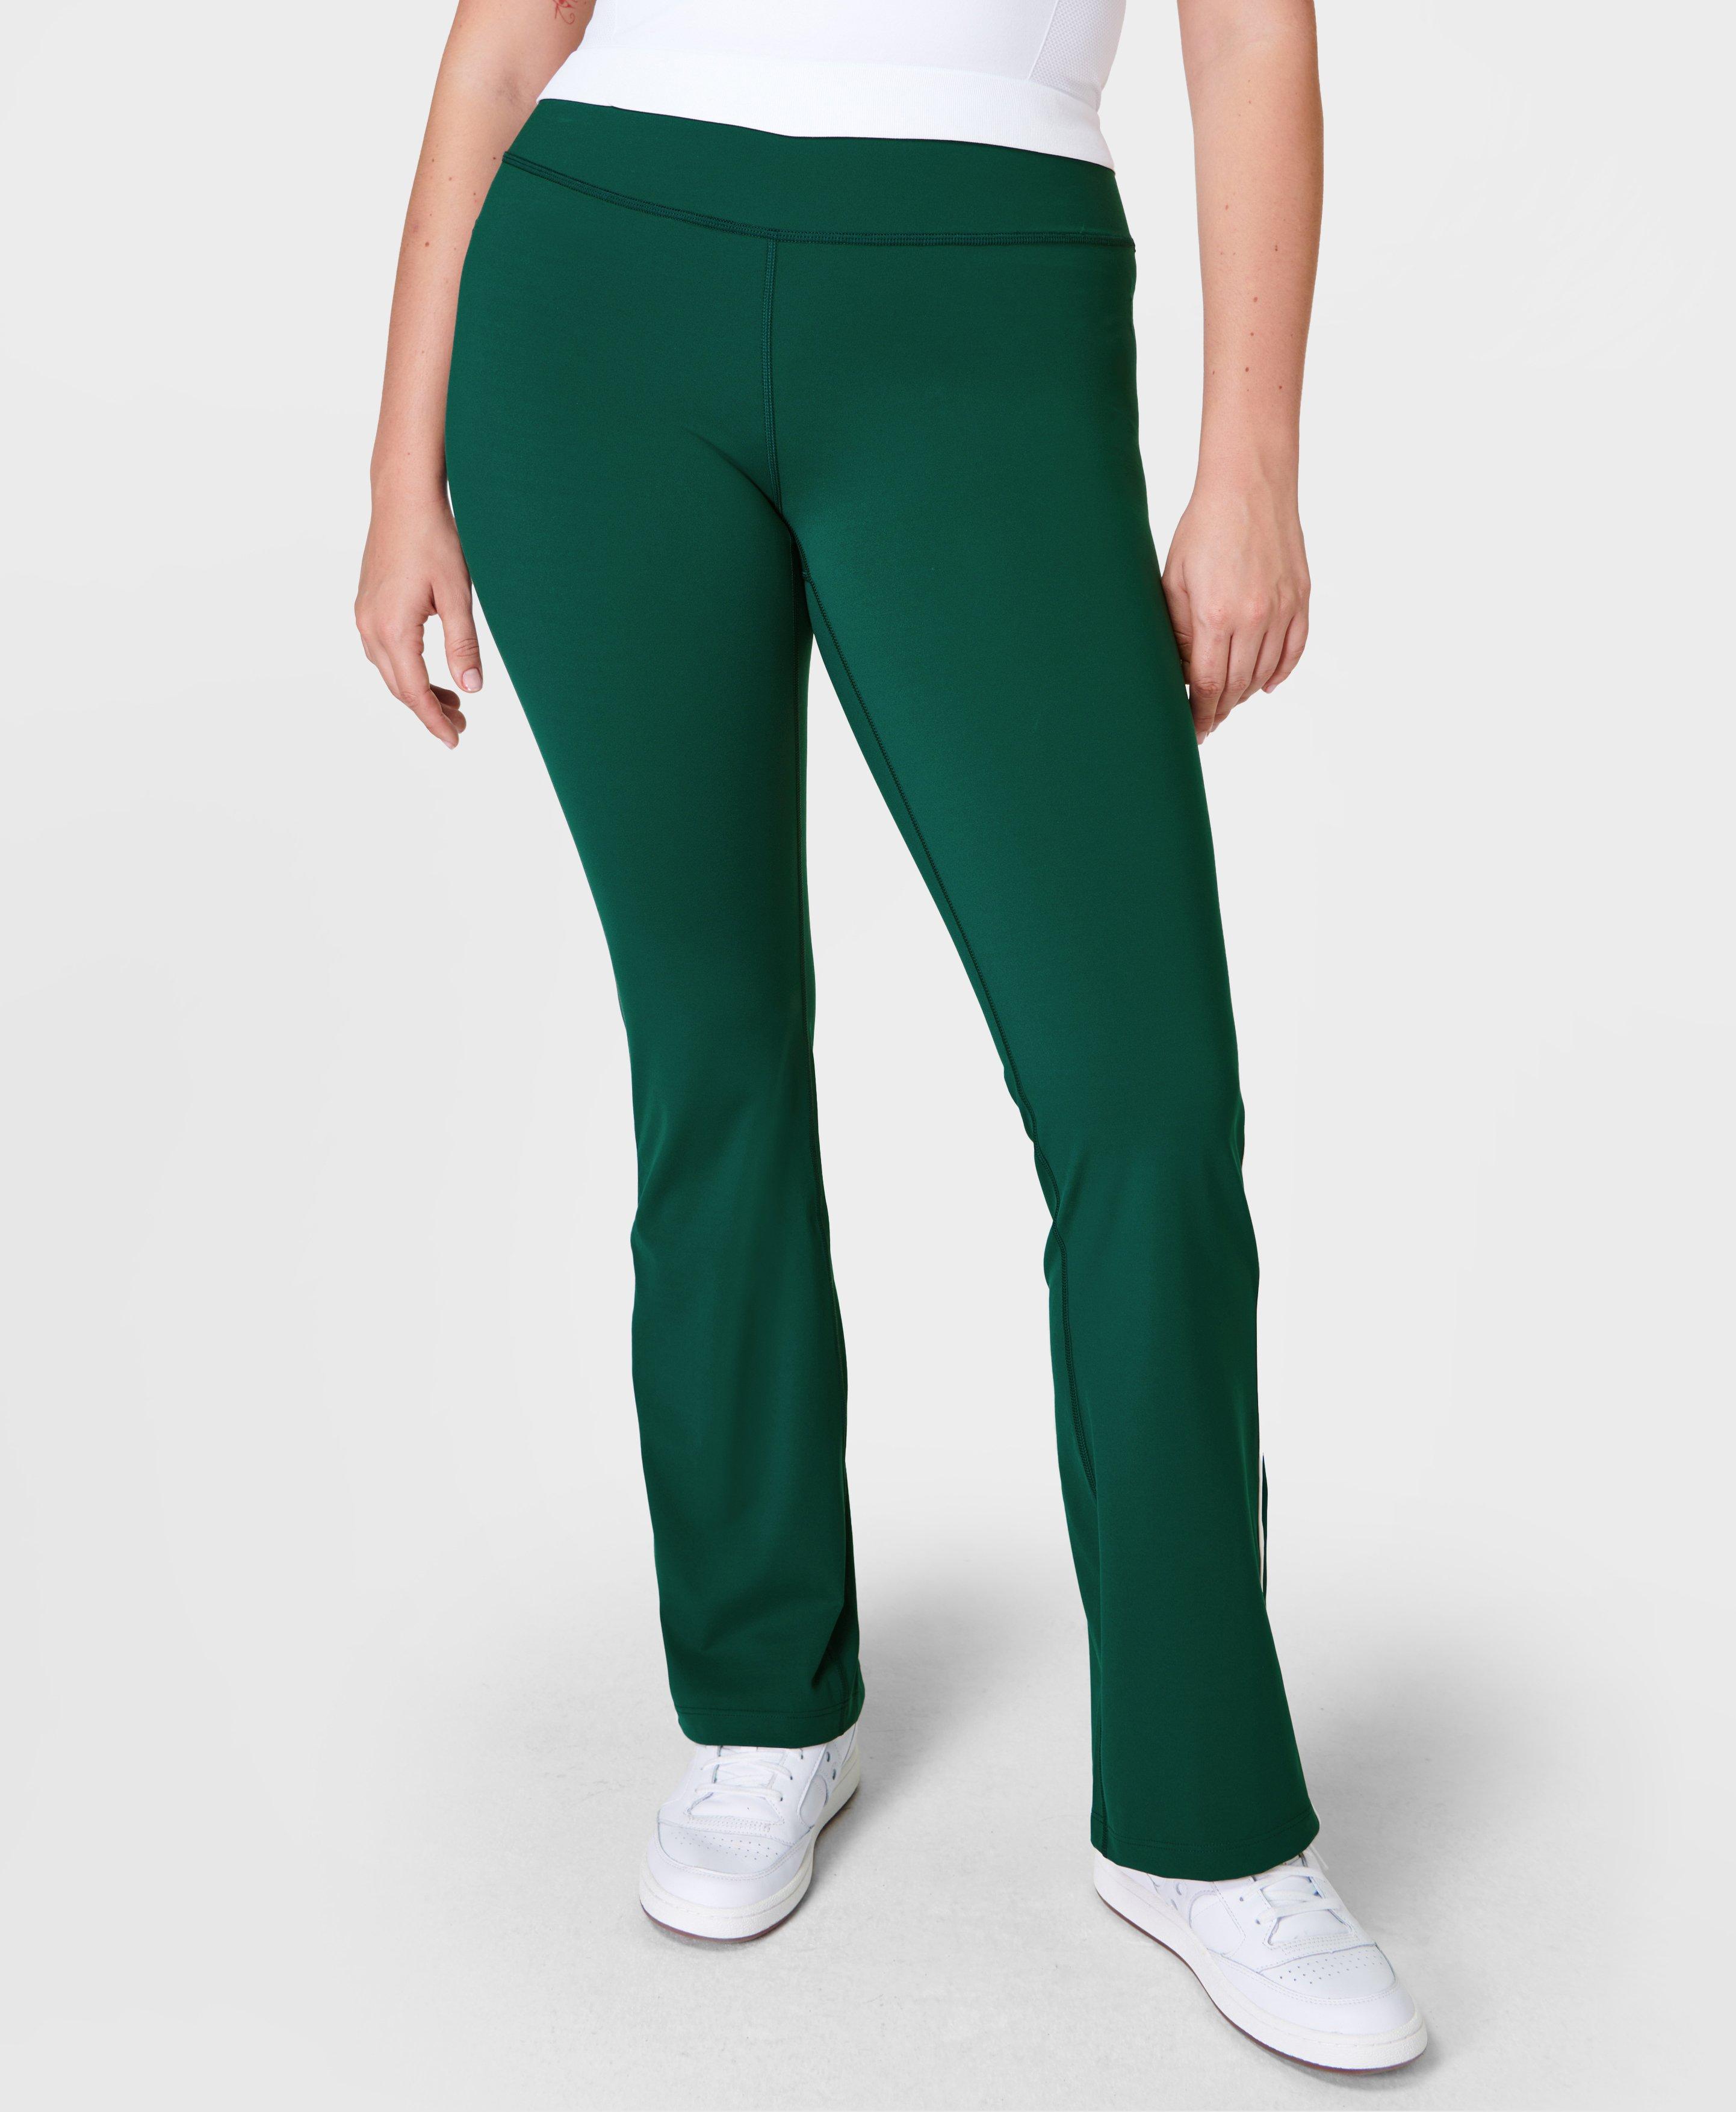 Betabrand Pants Womens L Green Bootcut Dress Pant Yoga Stretch